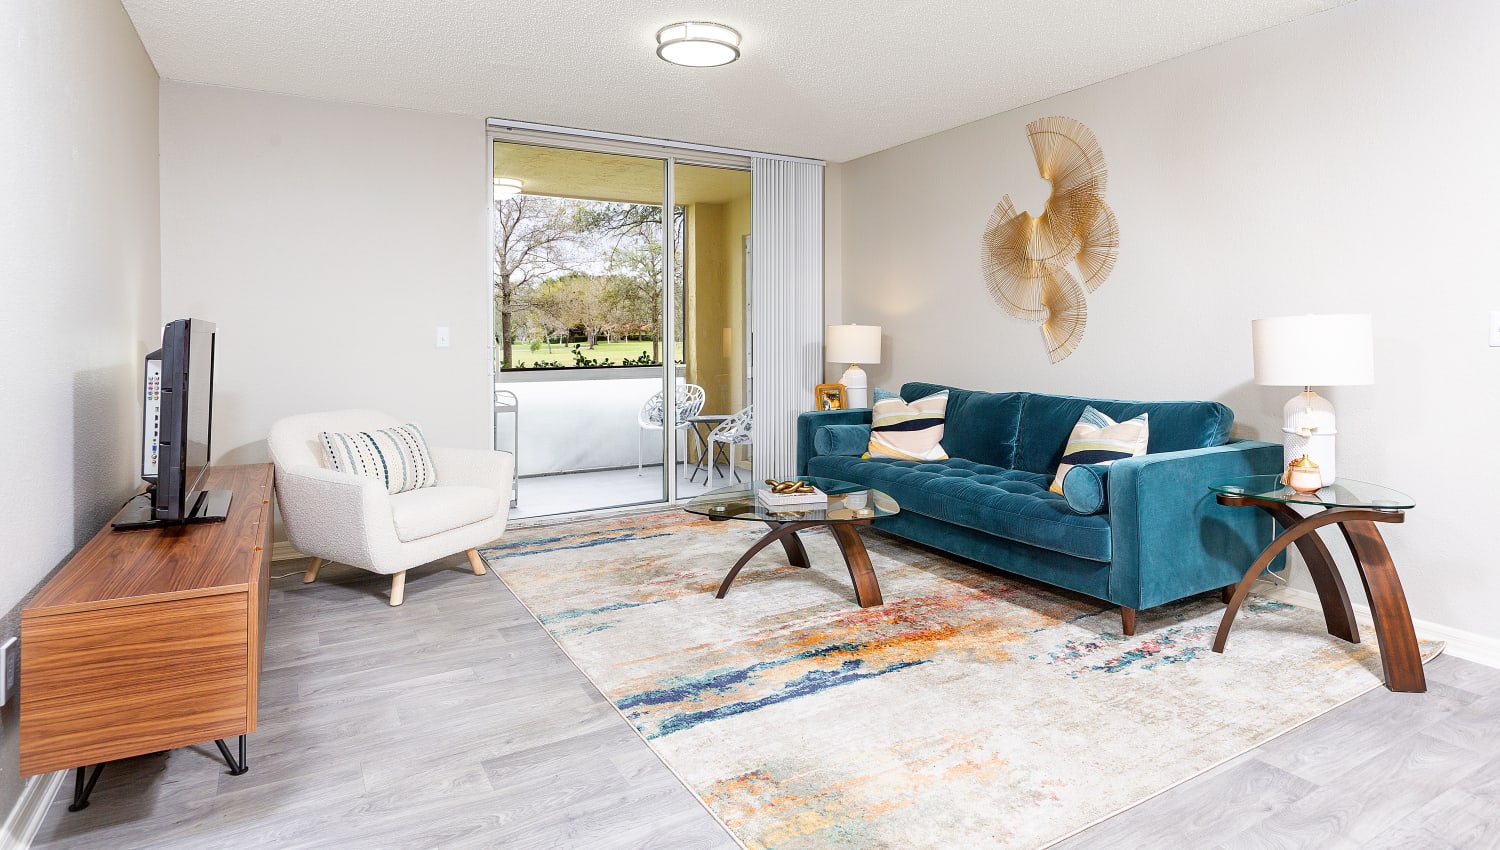 Living Room at Mosaic Apartments in Coral Springs, Florida